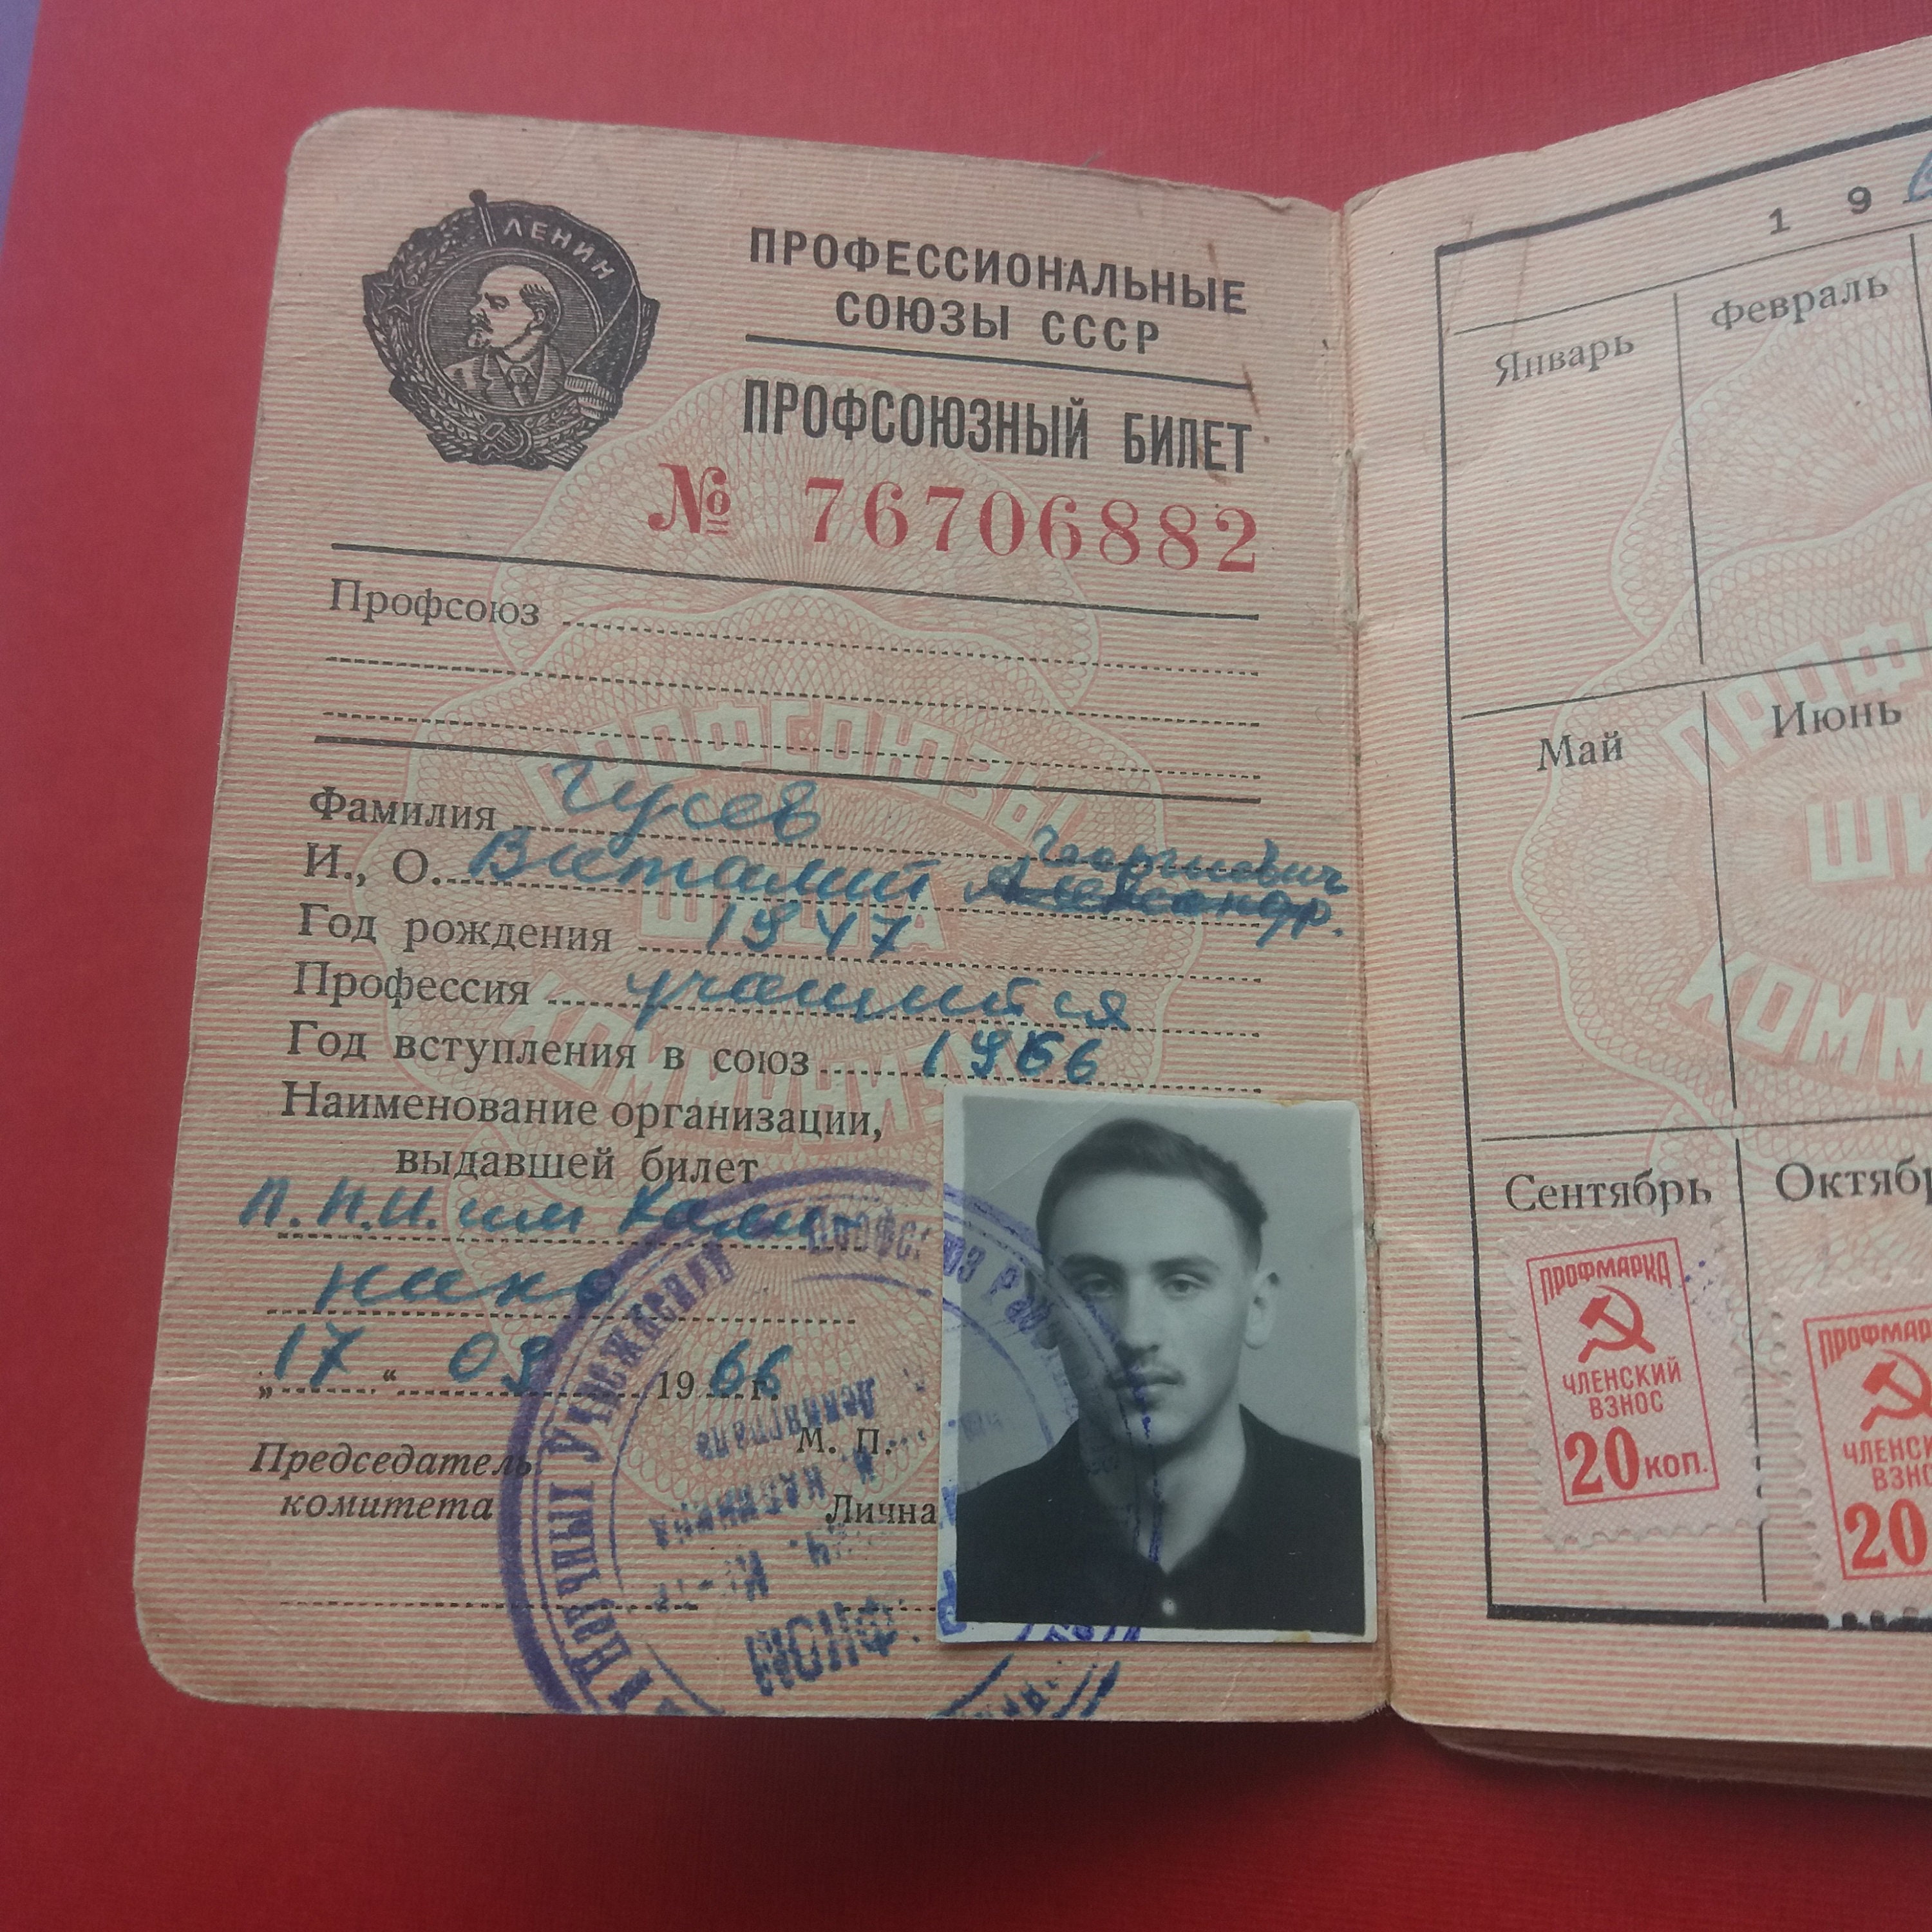 Soviet trade union card Old document Original Soviet photo Membership card USSR Trade Union card 1948